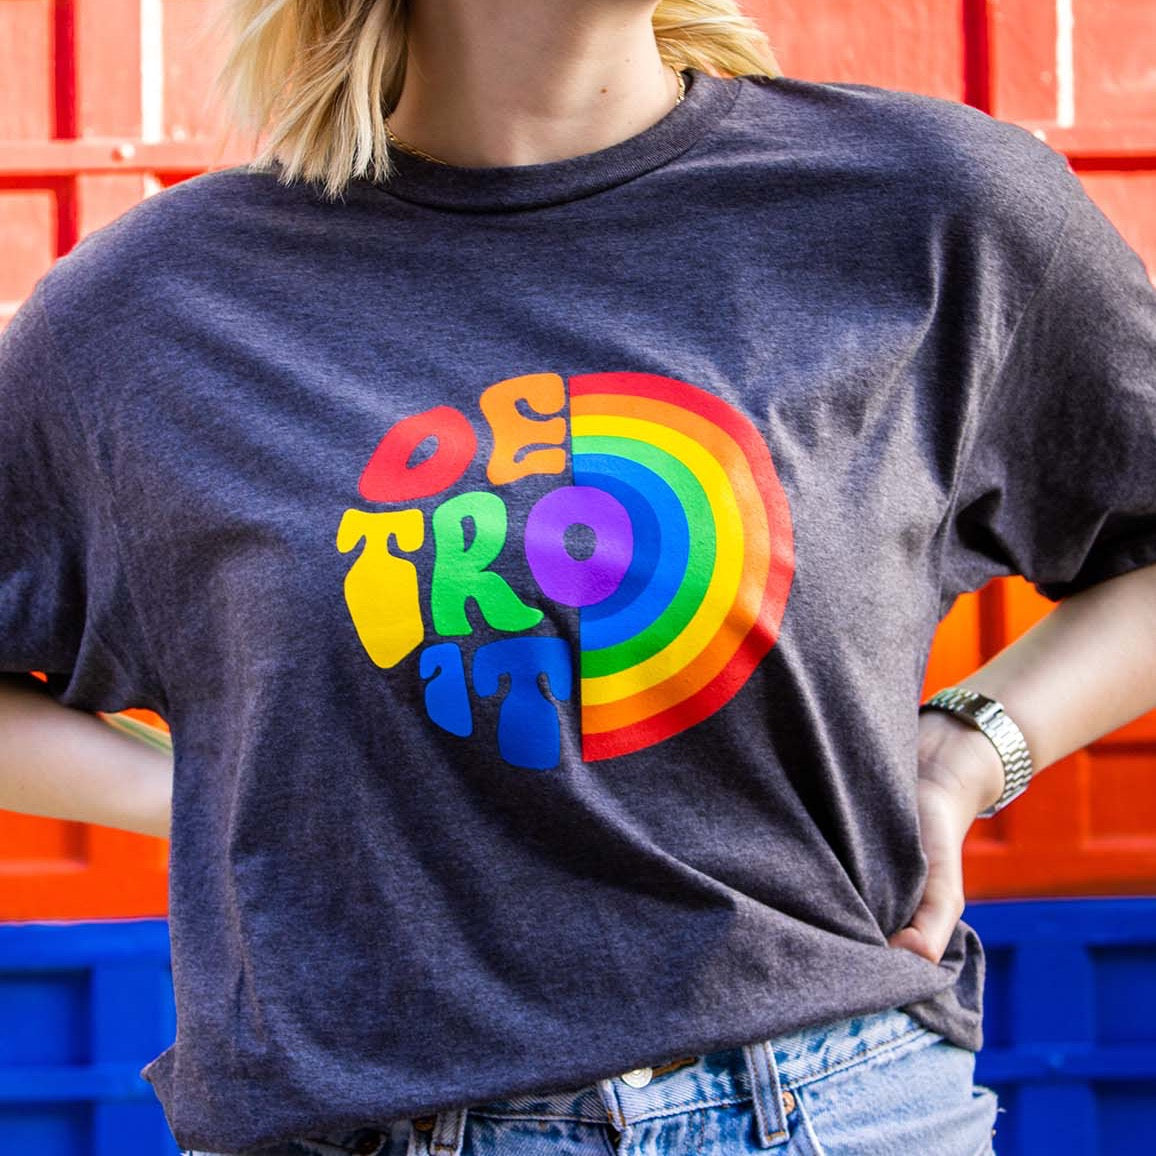 Unisex/Mens Detroit Rainbow T-shirt (Heather Black)